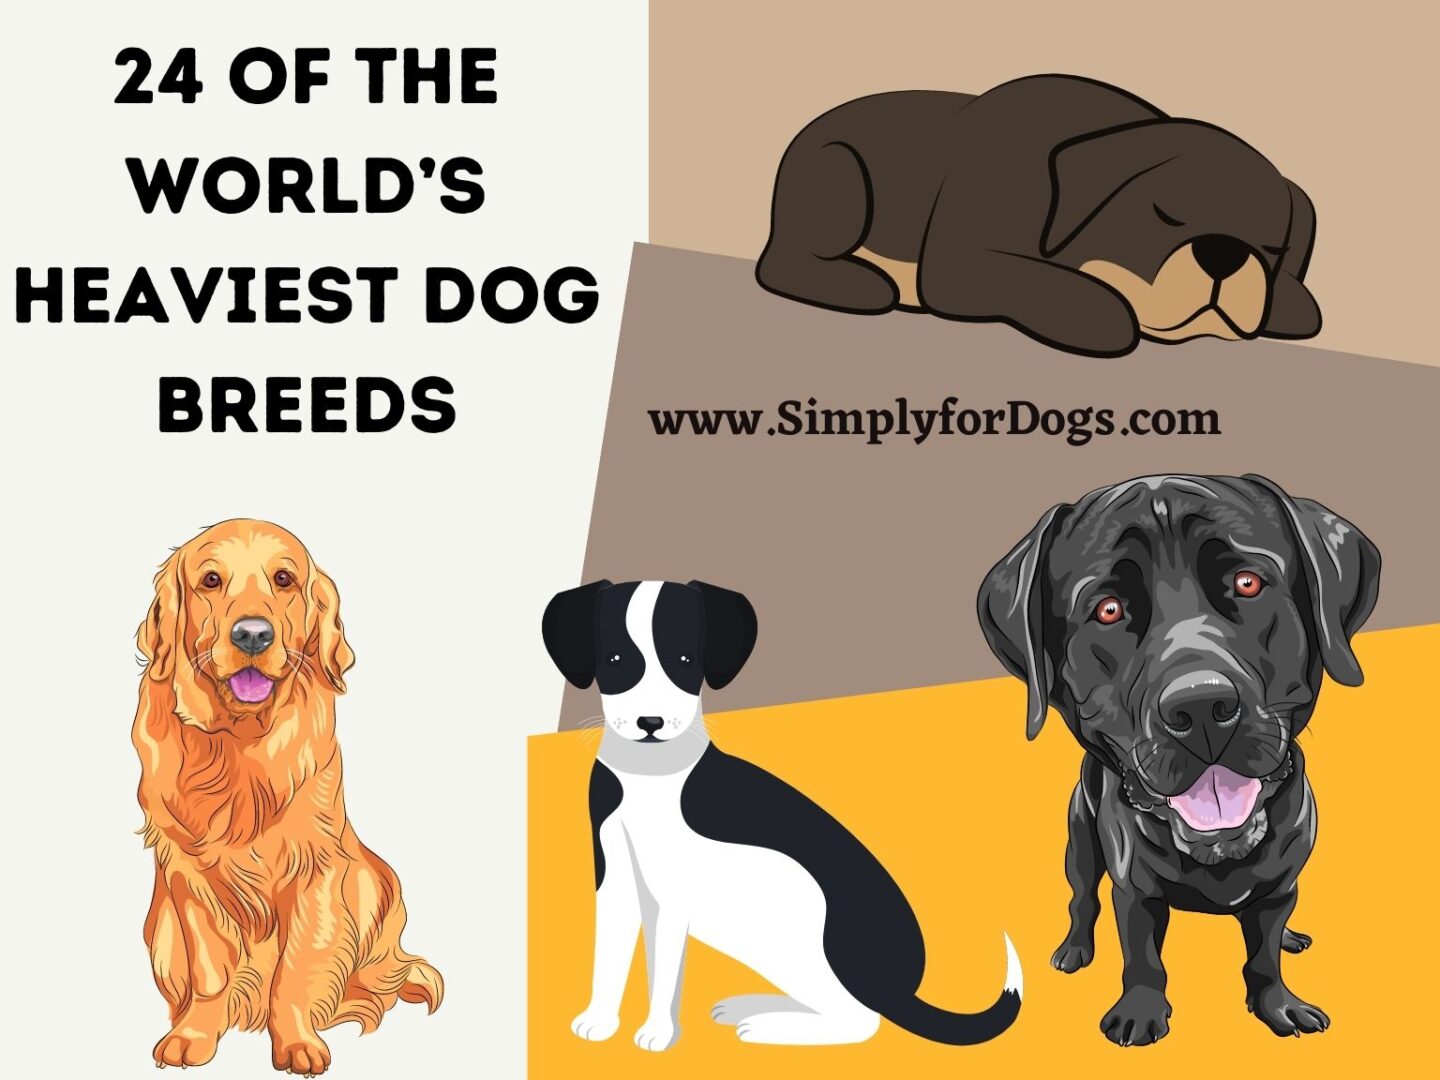 24 of the World’s Heaviest Dog Breeds